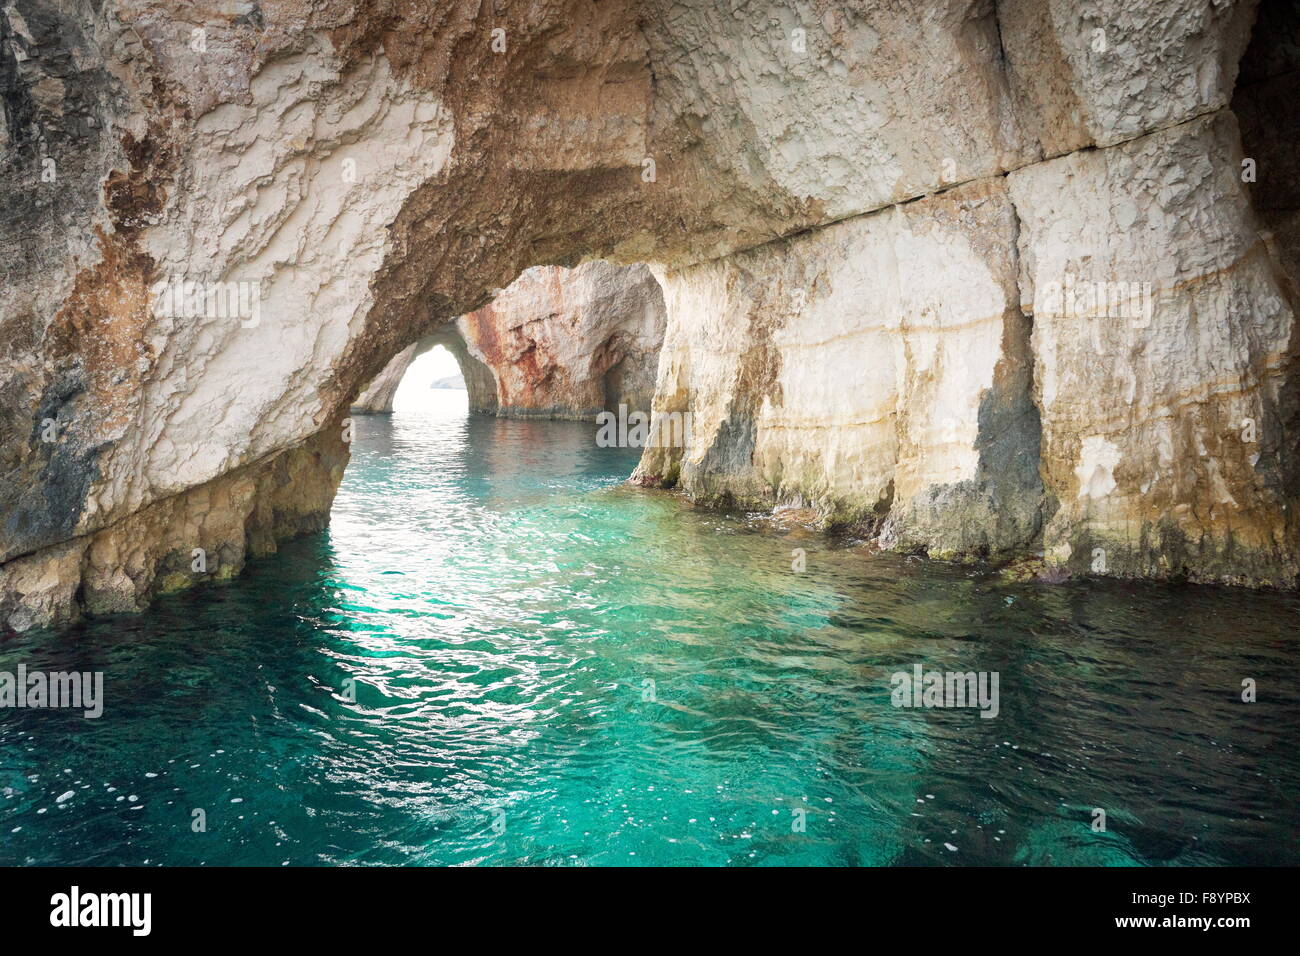 Greece - Zakynthos Island, Blue Caves Stock Photo